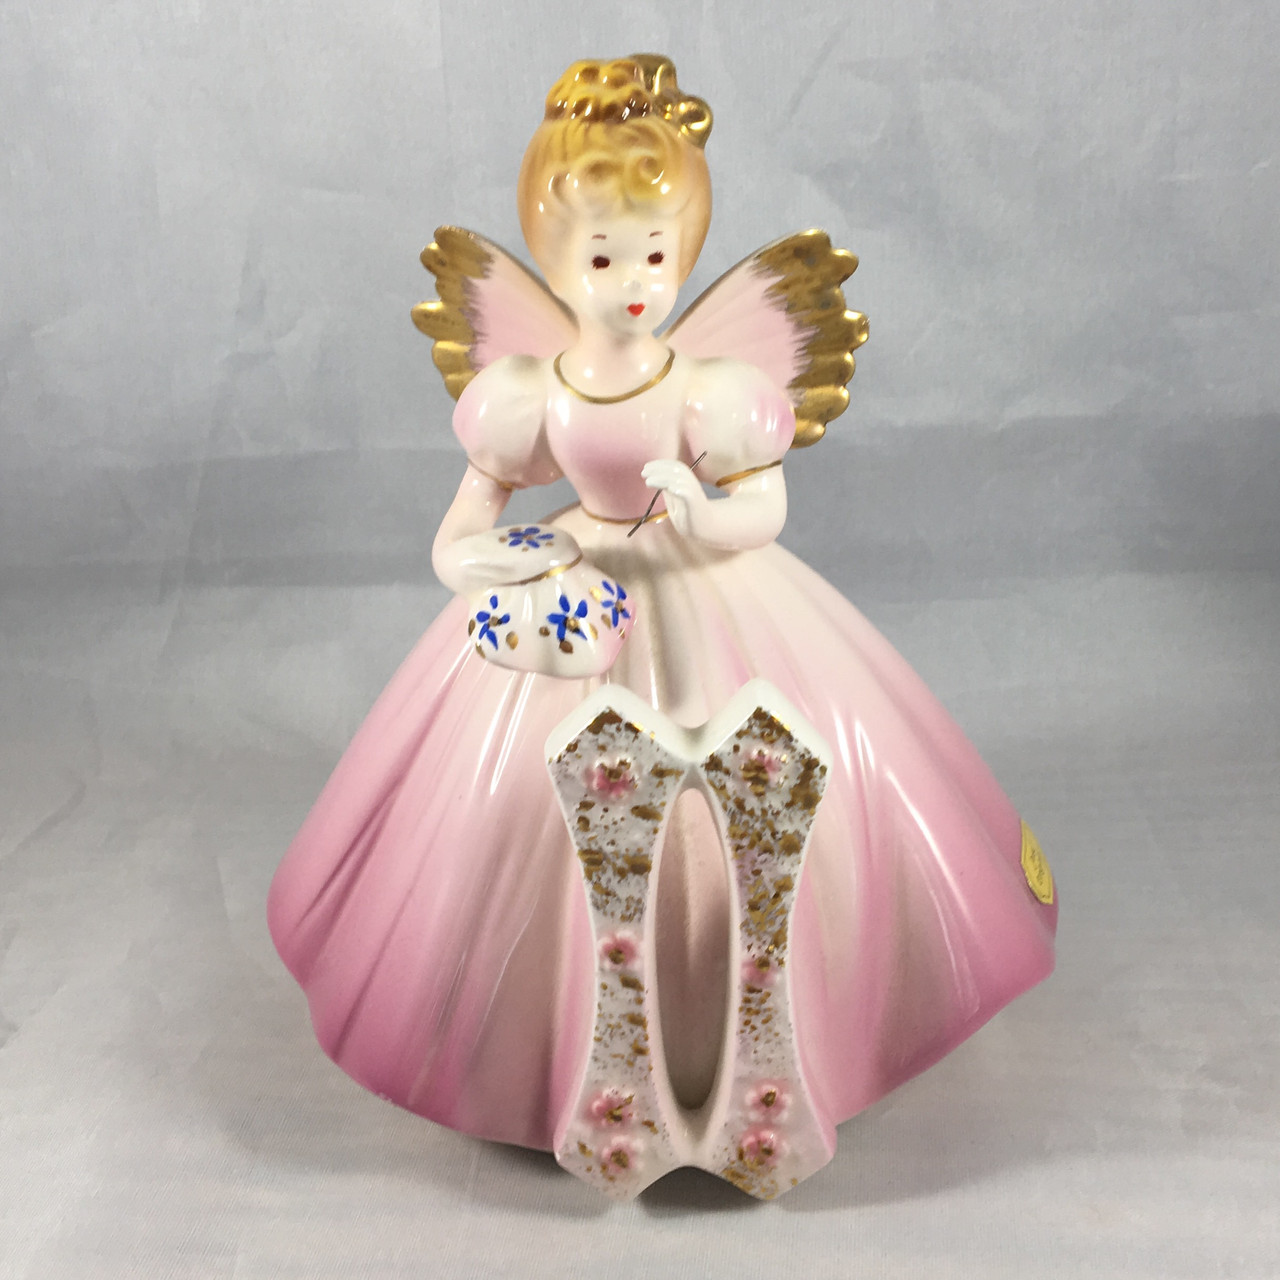 Applause #11 Birthday Doll Vintage Josef Originals Birthday Dolls Angels